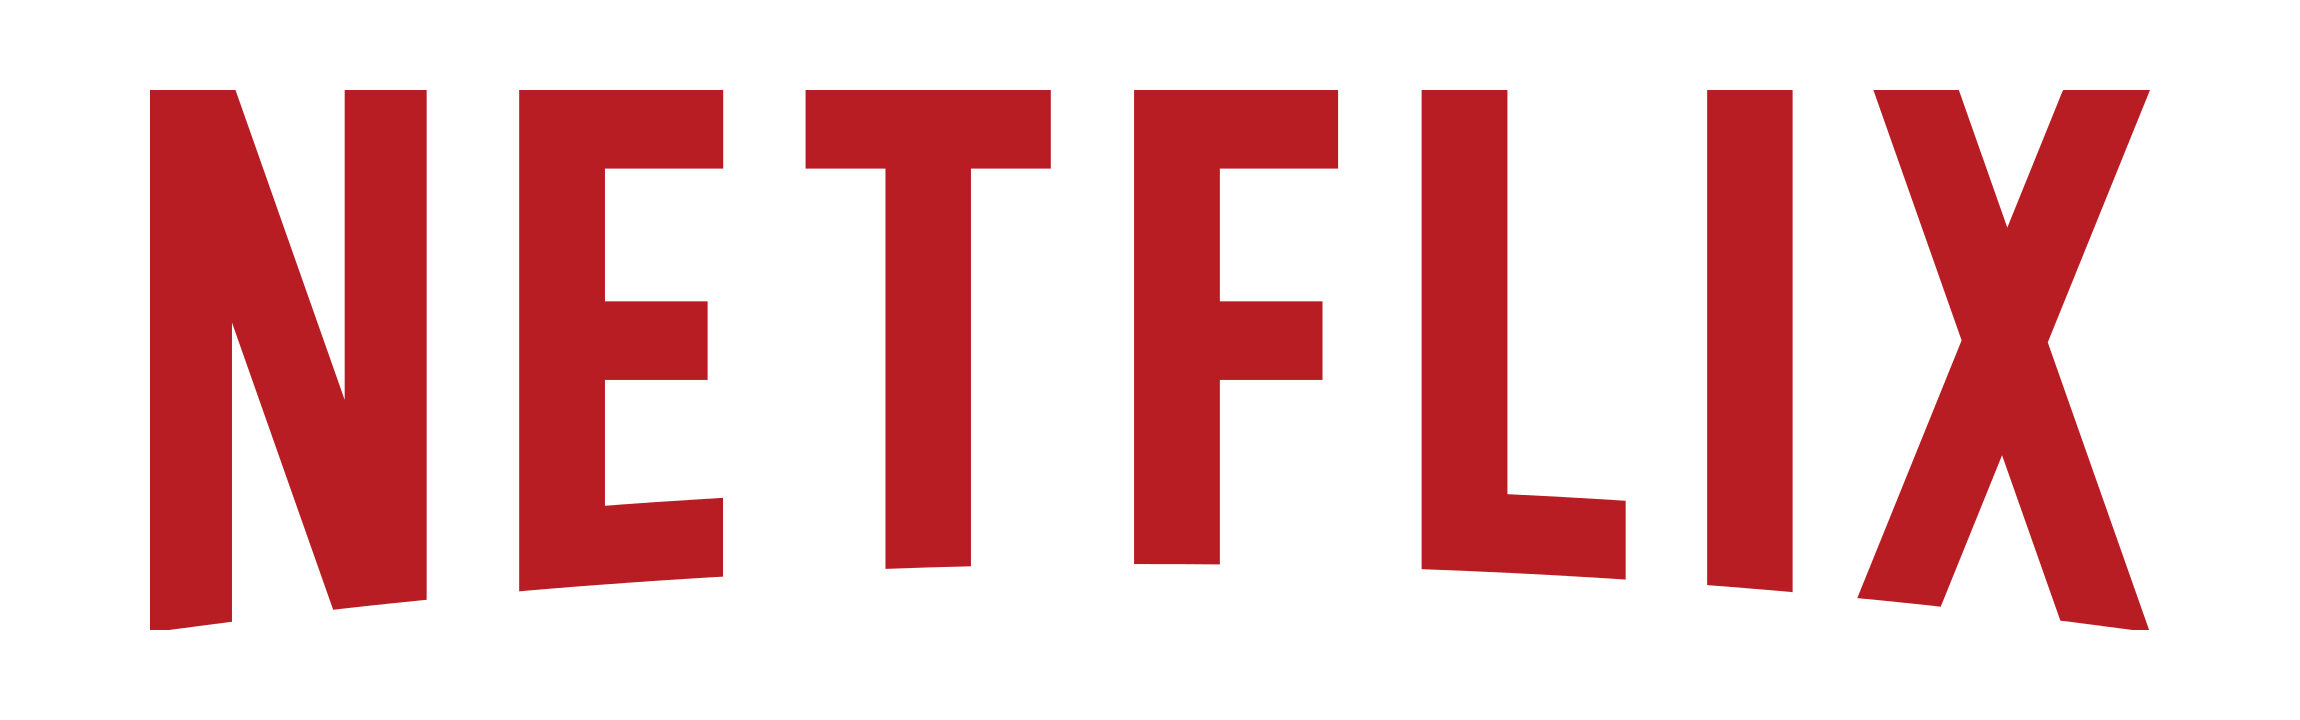 Netflix-new-logo.jpg